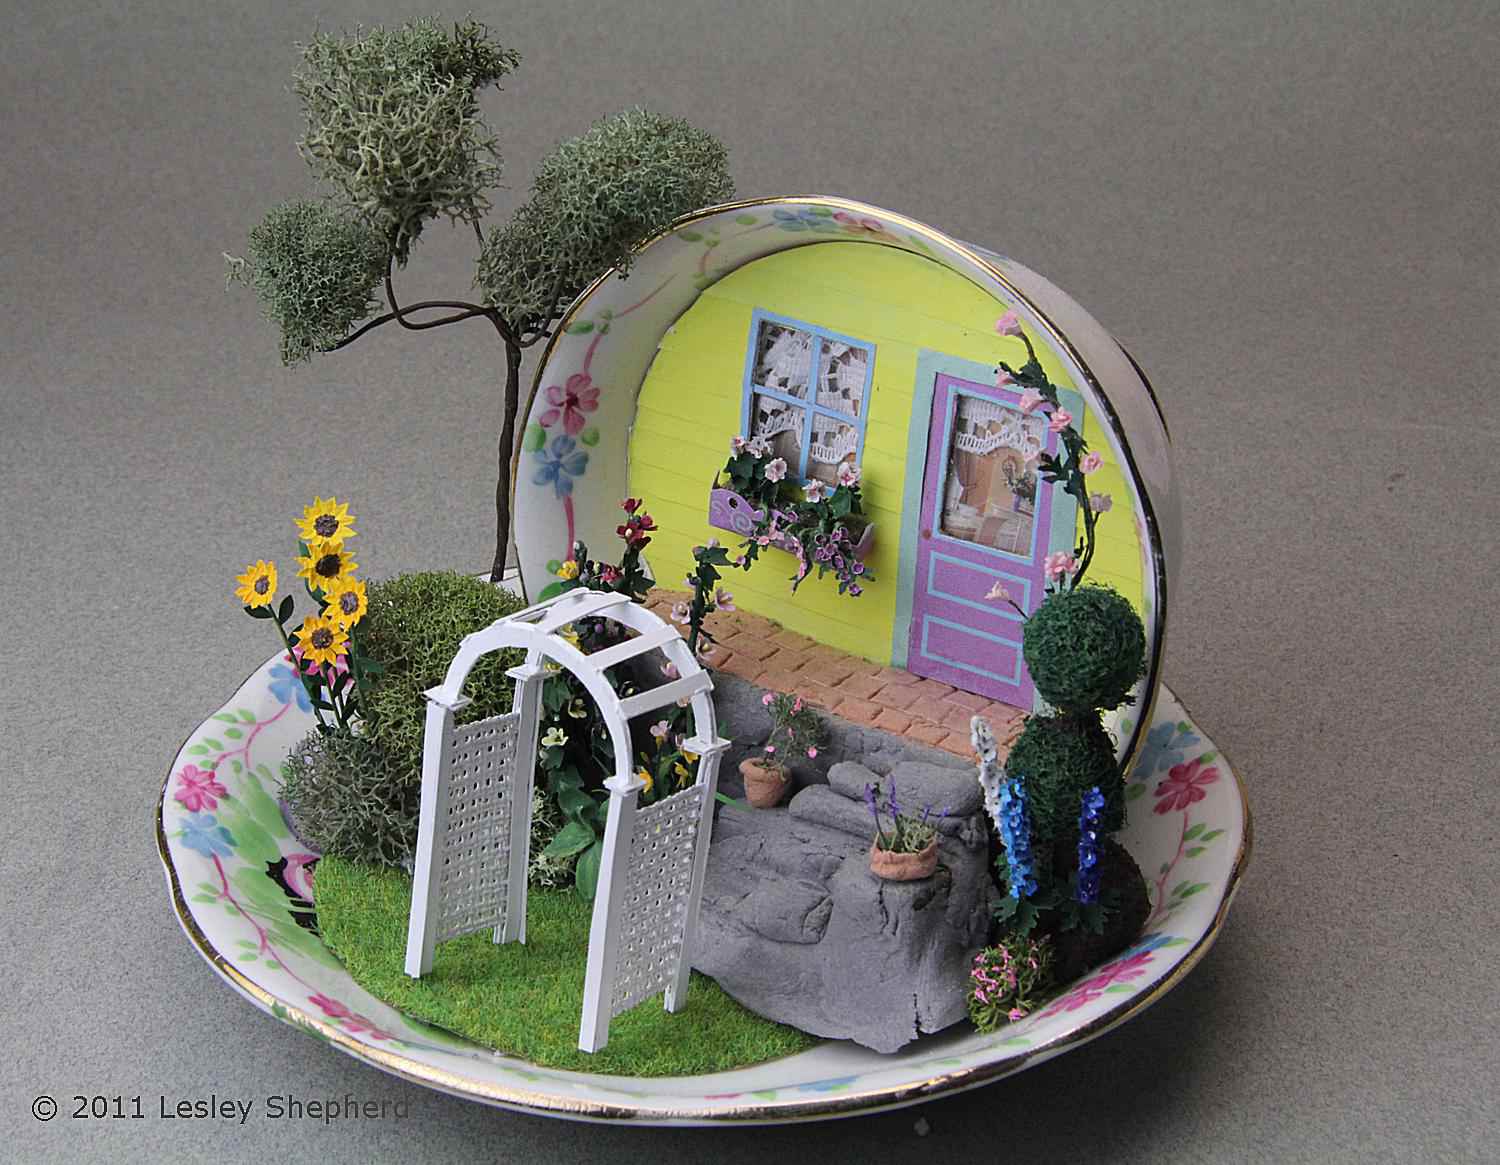 Quarter scale garden arbor set in a miniature garden scene in a teacup.